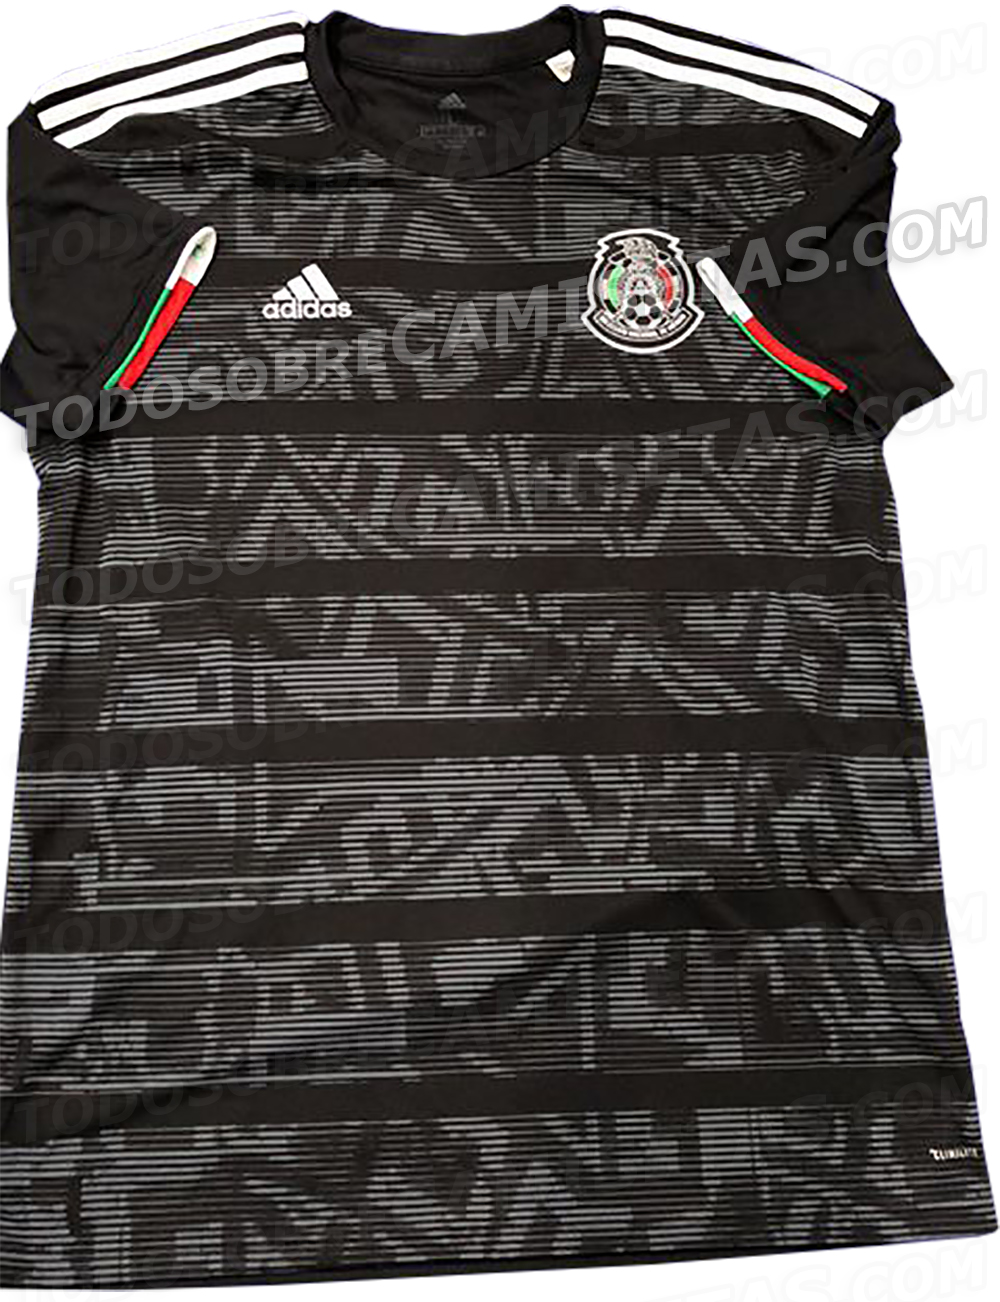 jersey-mexico-2019-adidas-2.jpg